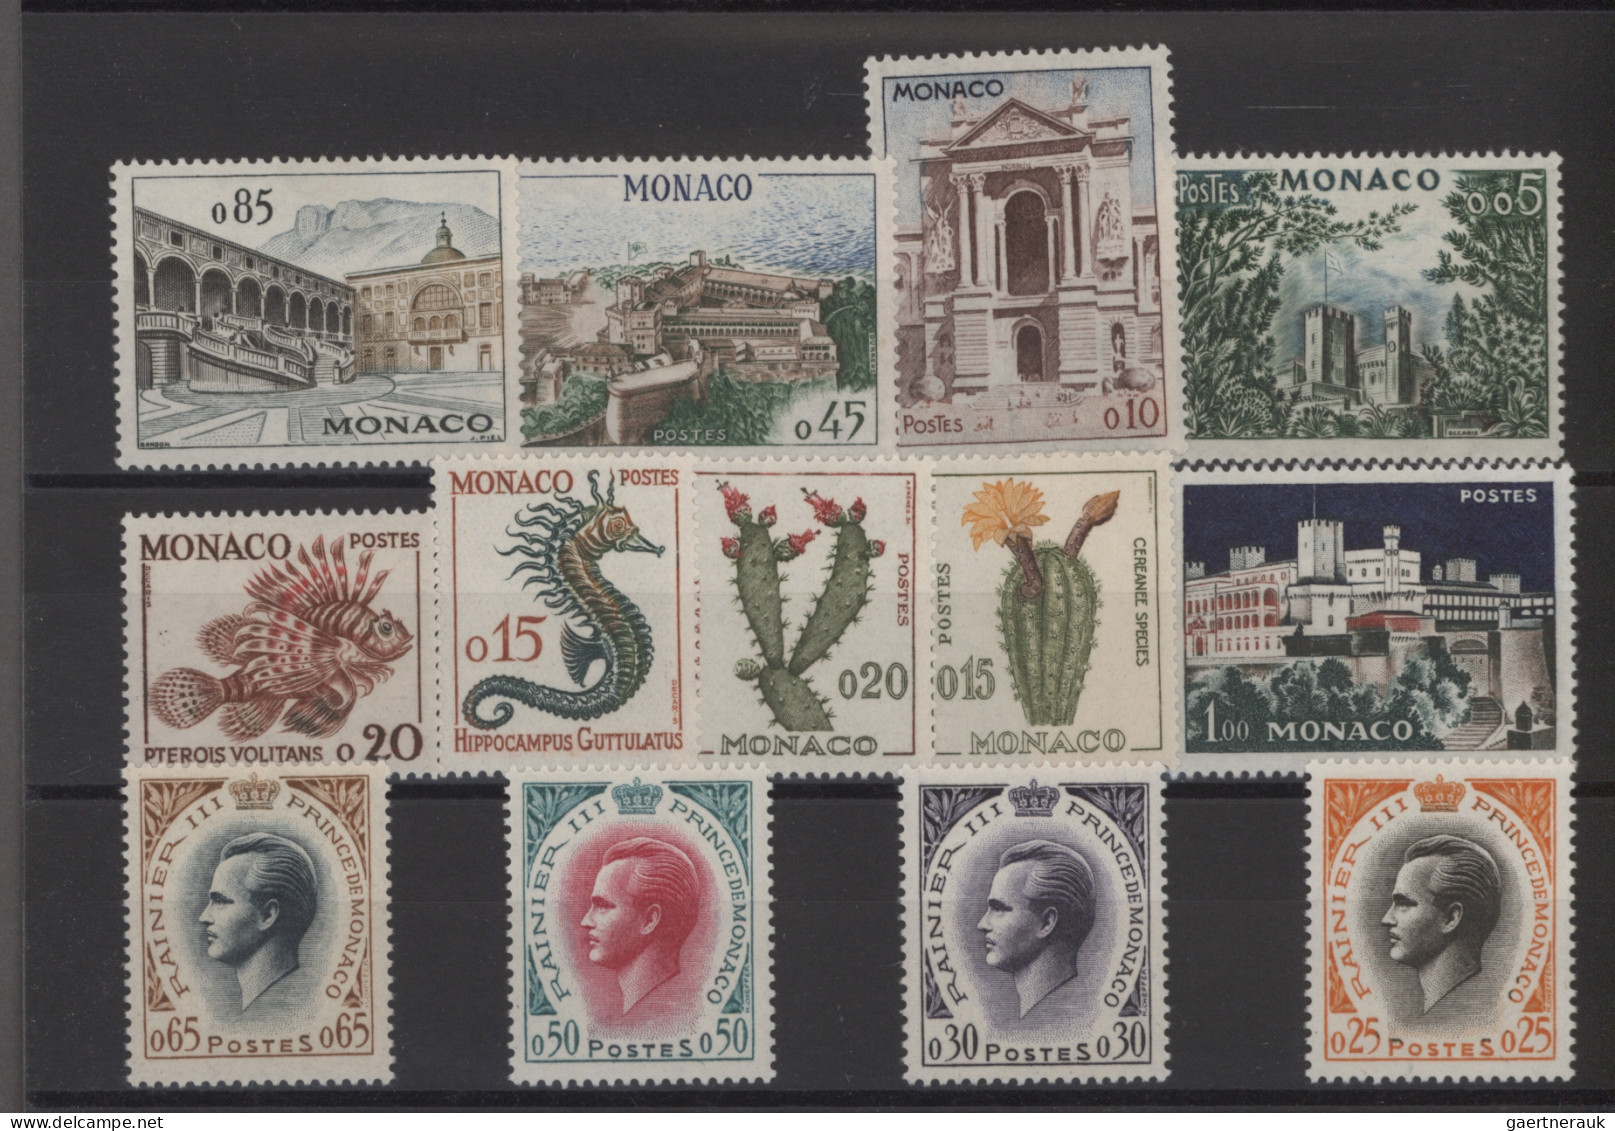 Monaco: 1937/2000 great variety of souvenir sheets, Mi. No.1-4b , also some attr